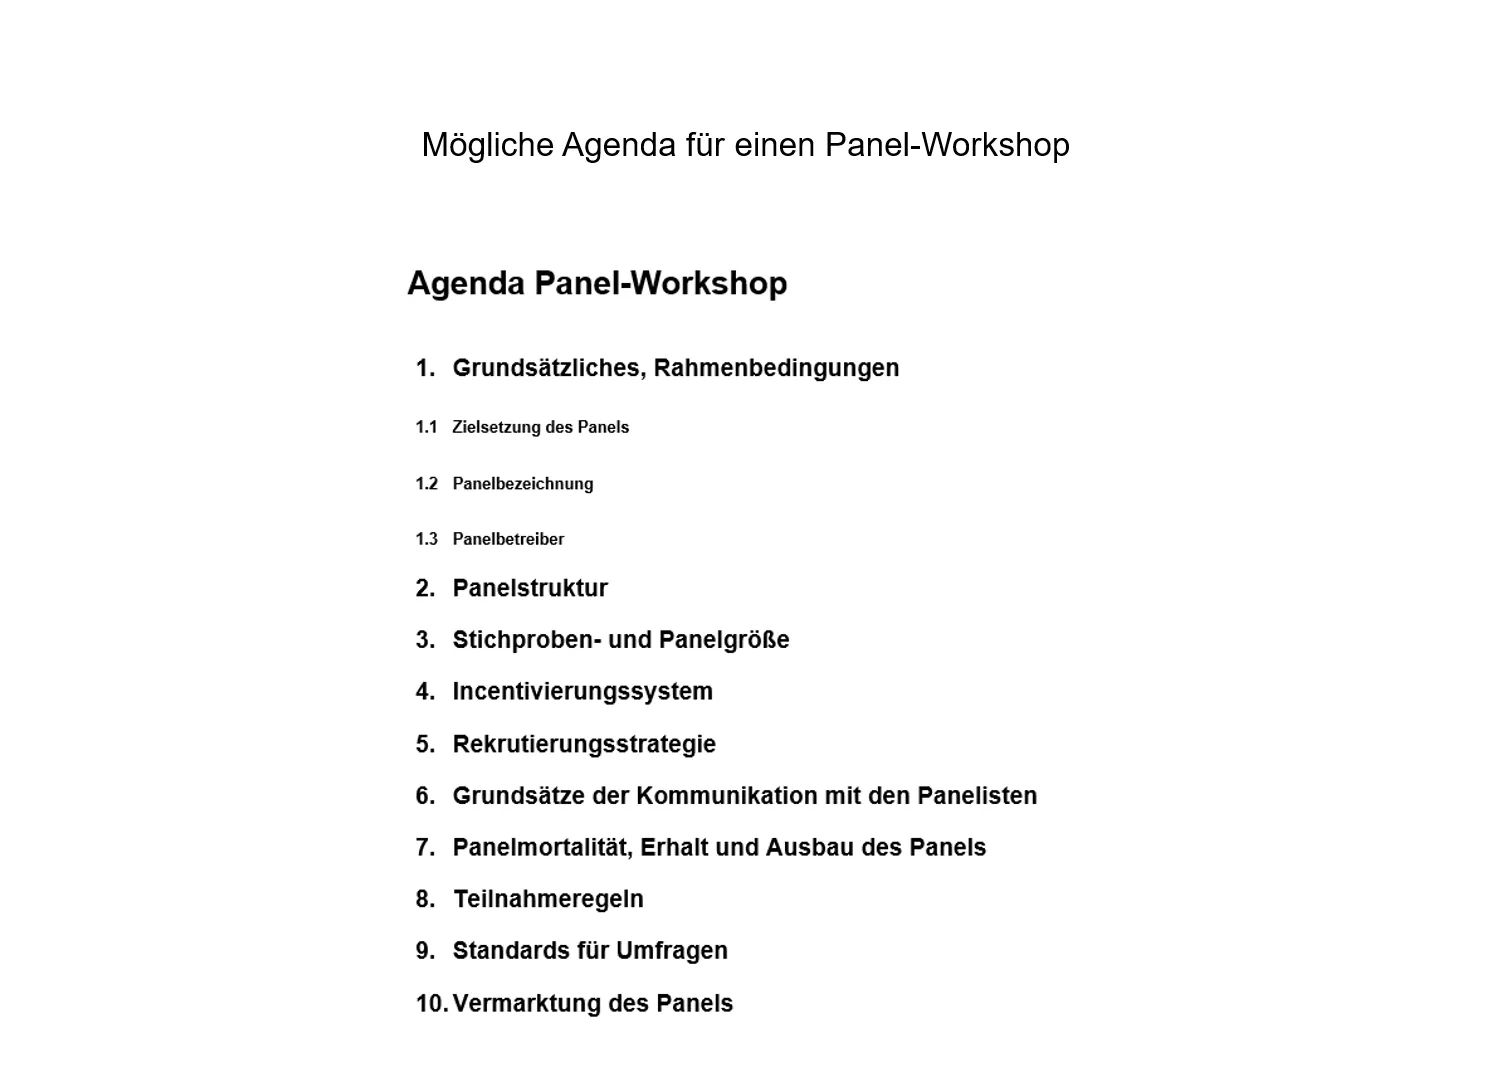 Panelaufbau Agenda Panel-Workshop